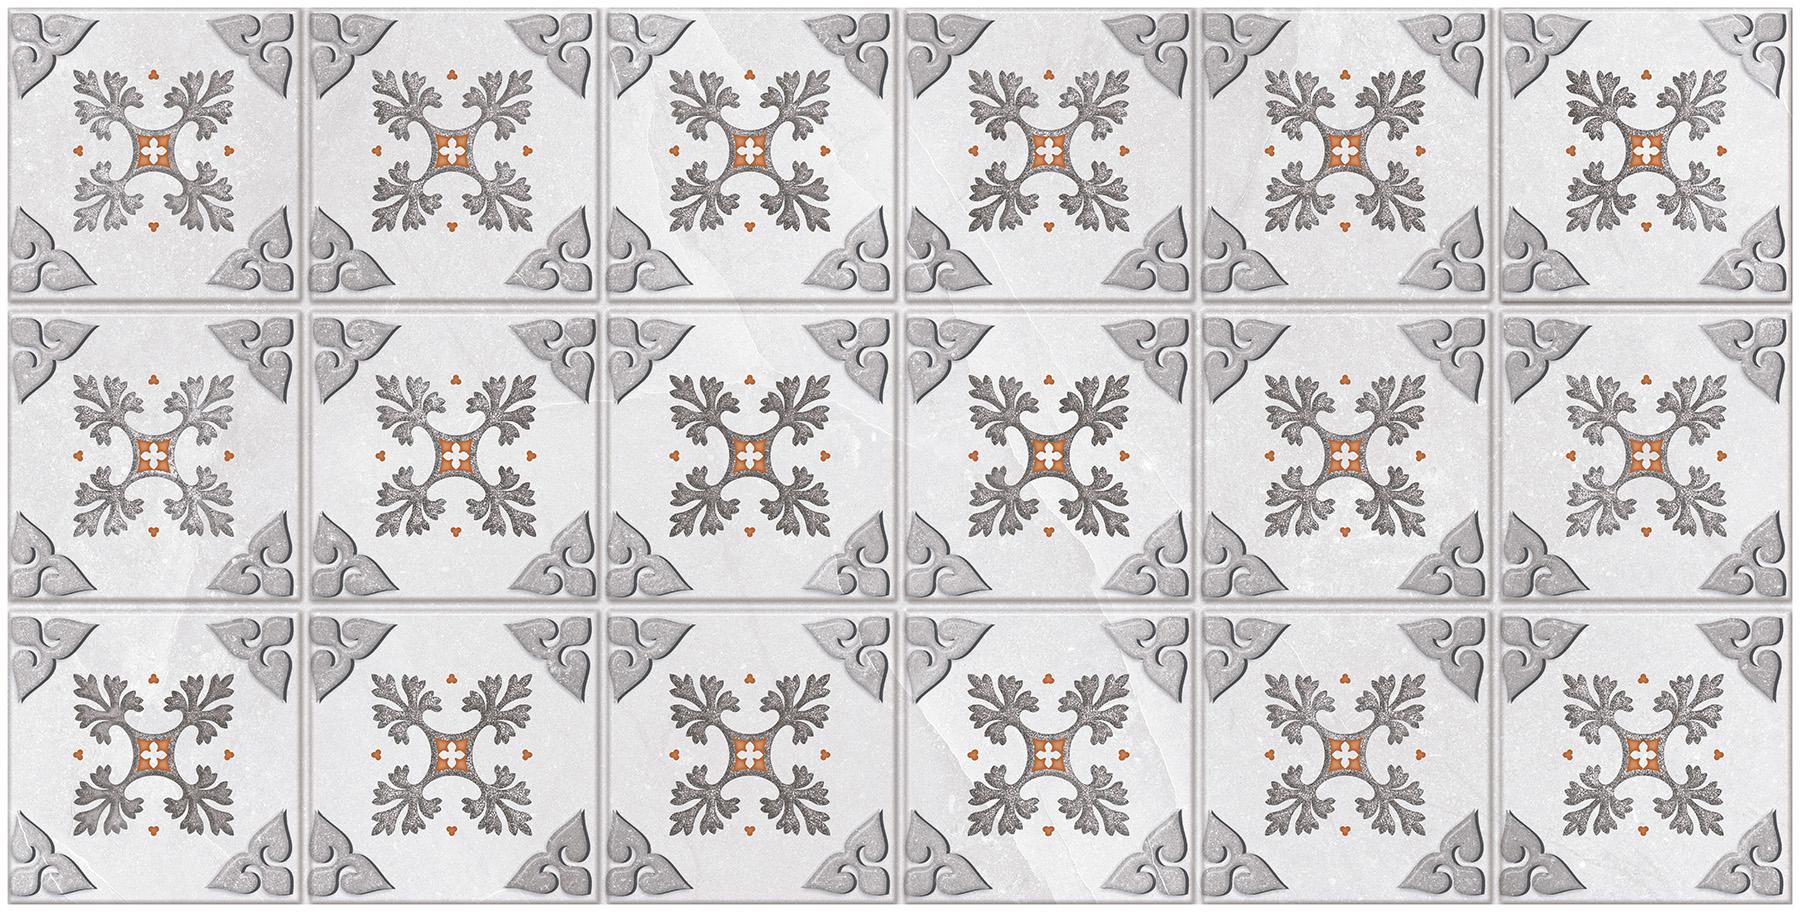 Glass Mosaic Tiles for Bathroom Tiles, Living Room Tiles, Kitchen Tiles, Bedroom Tiles, Balcony Tiles